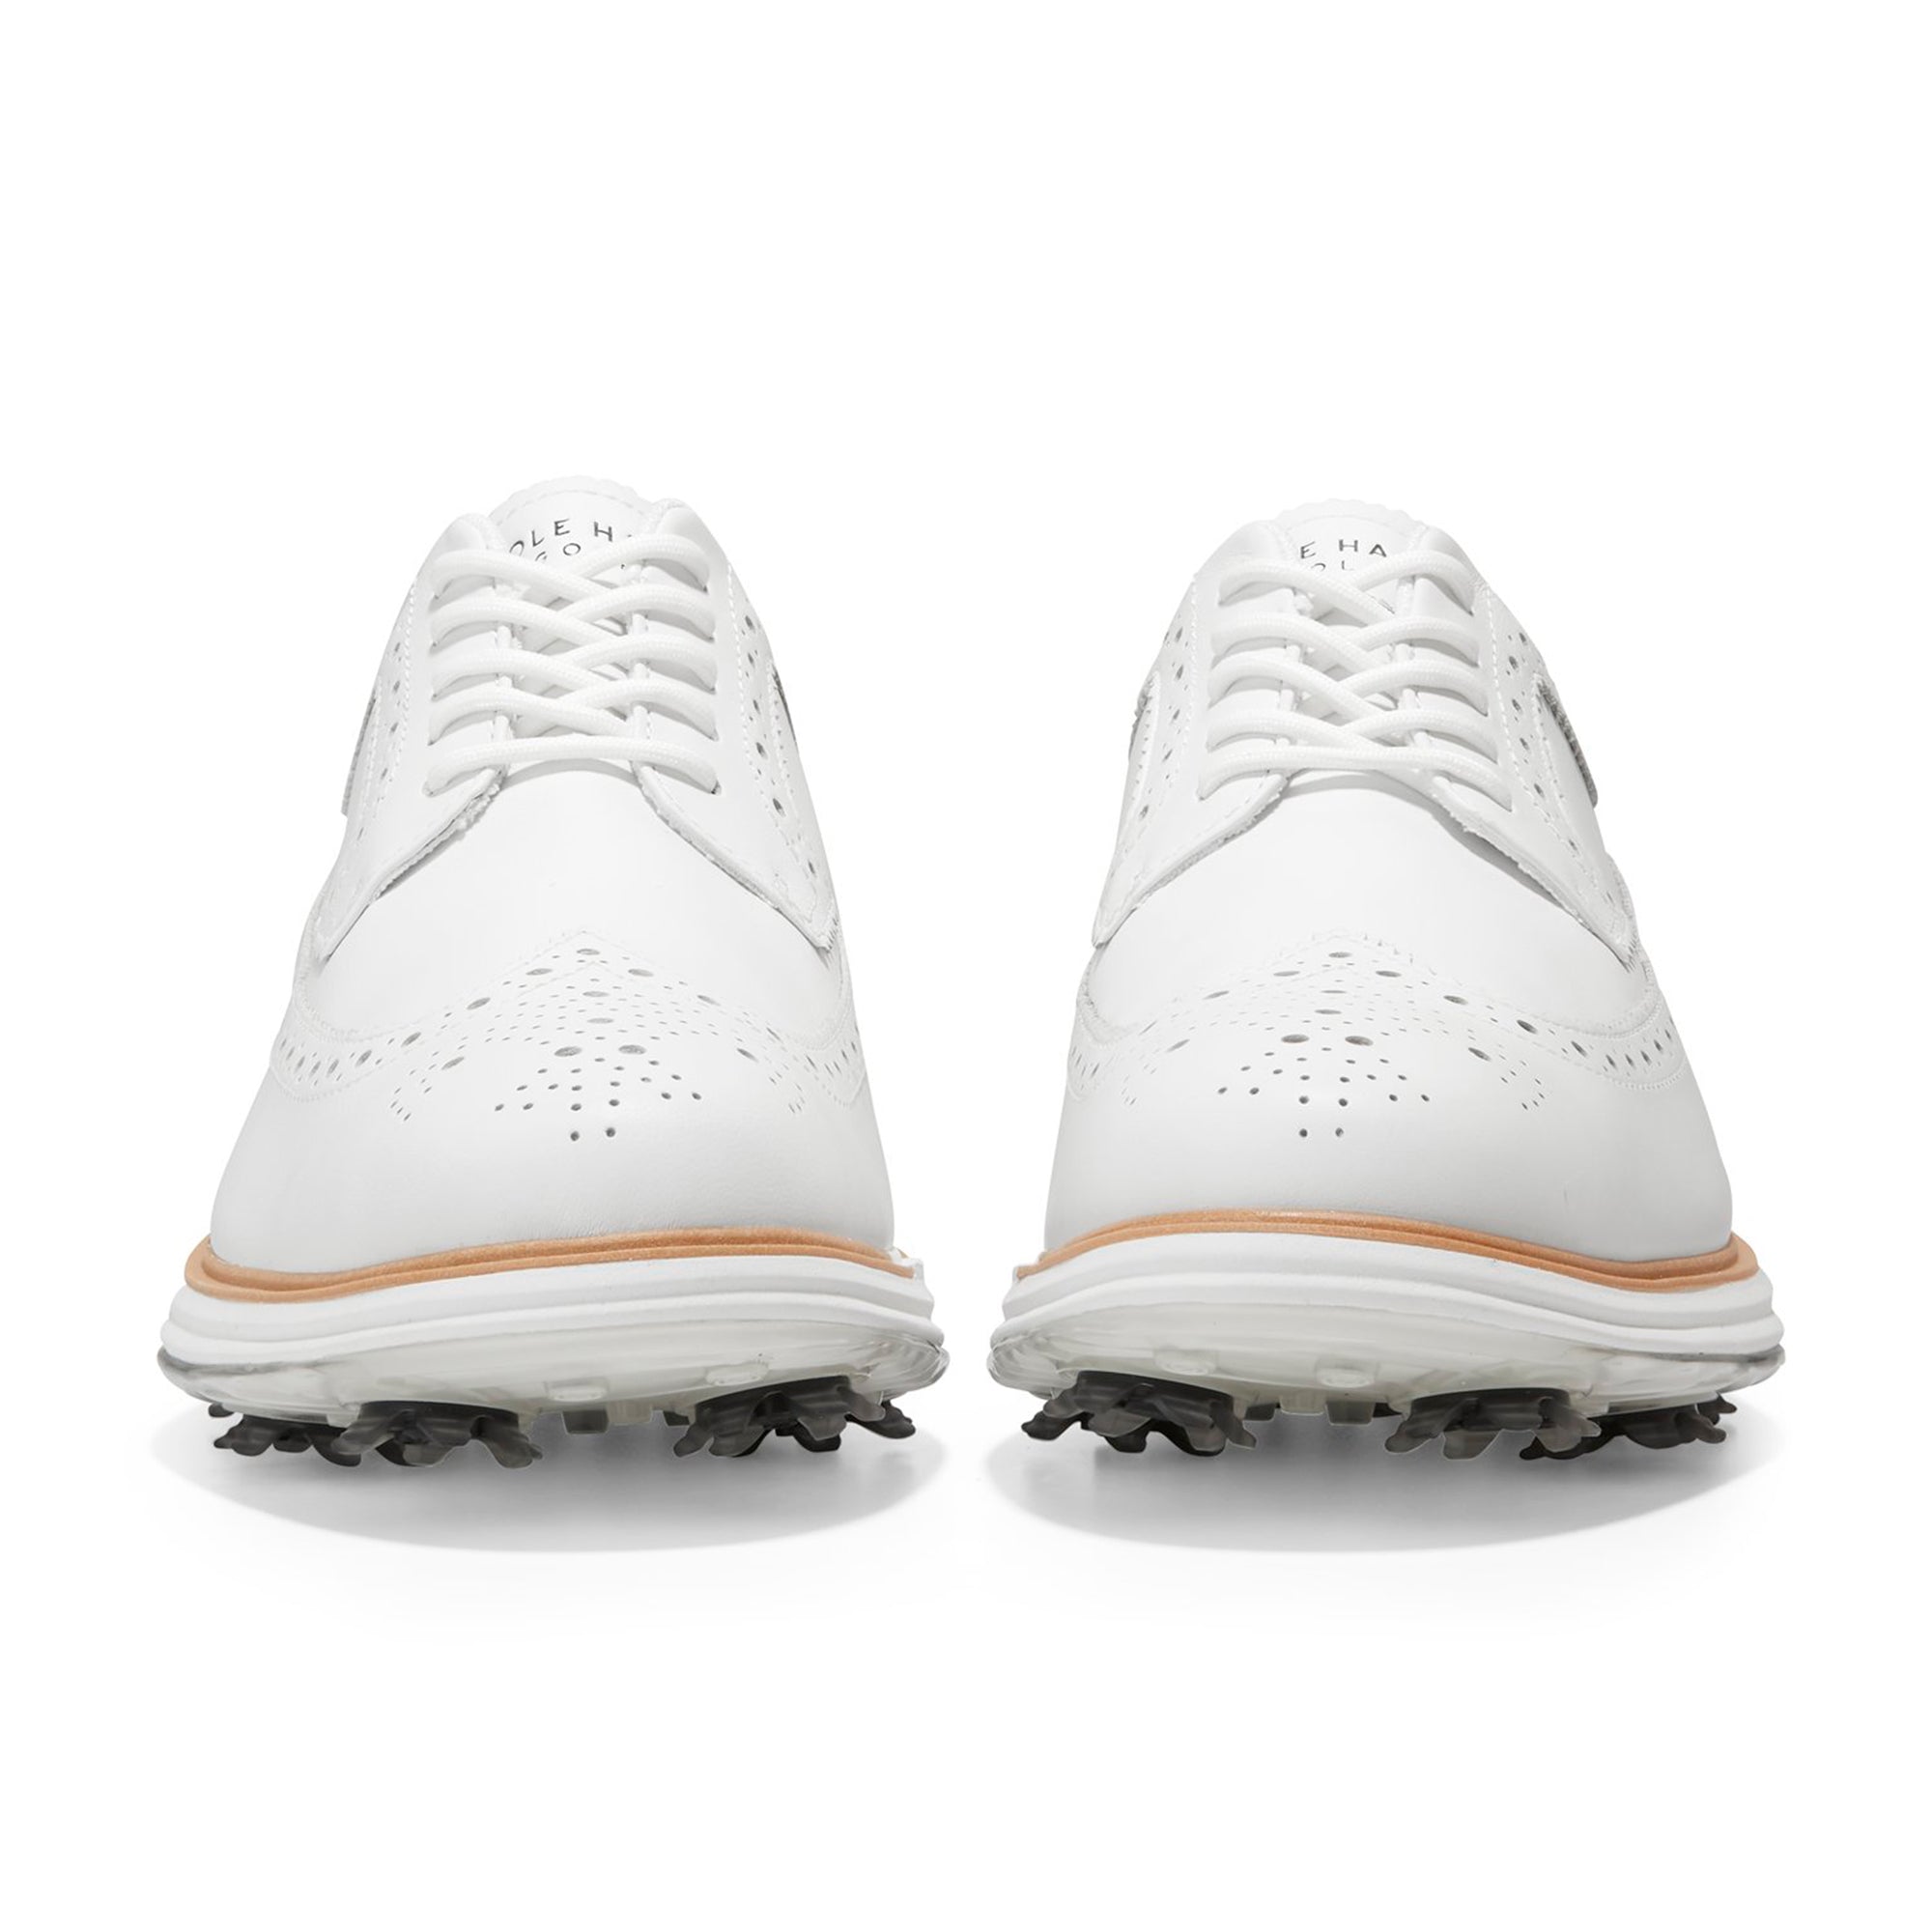 Cole Haan OriginalGrand Tour Golf Shoes C36153 Optic White Natural ...